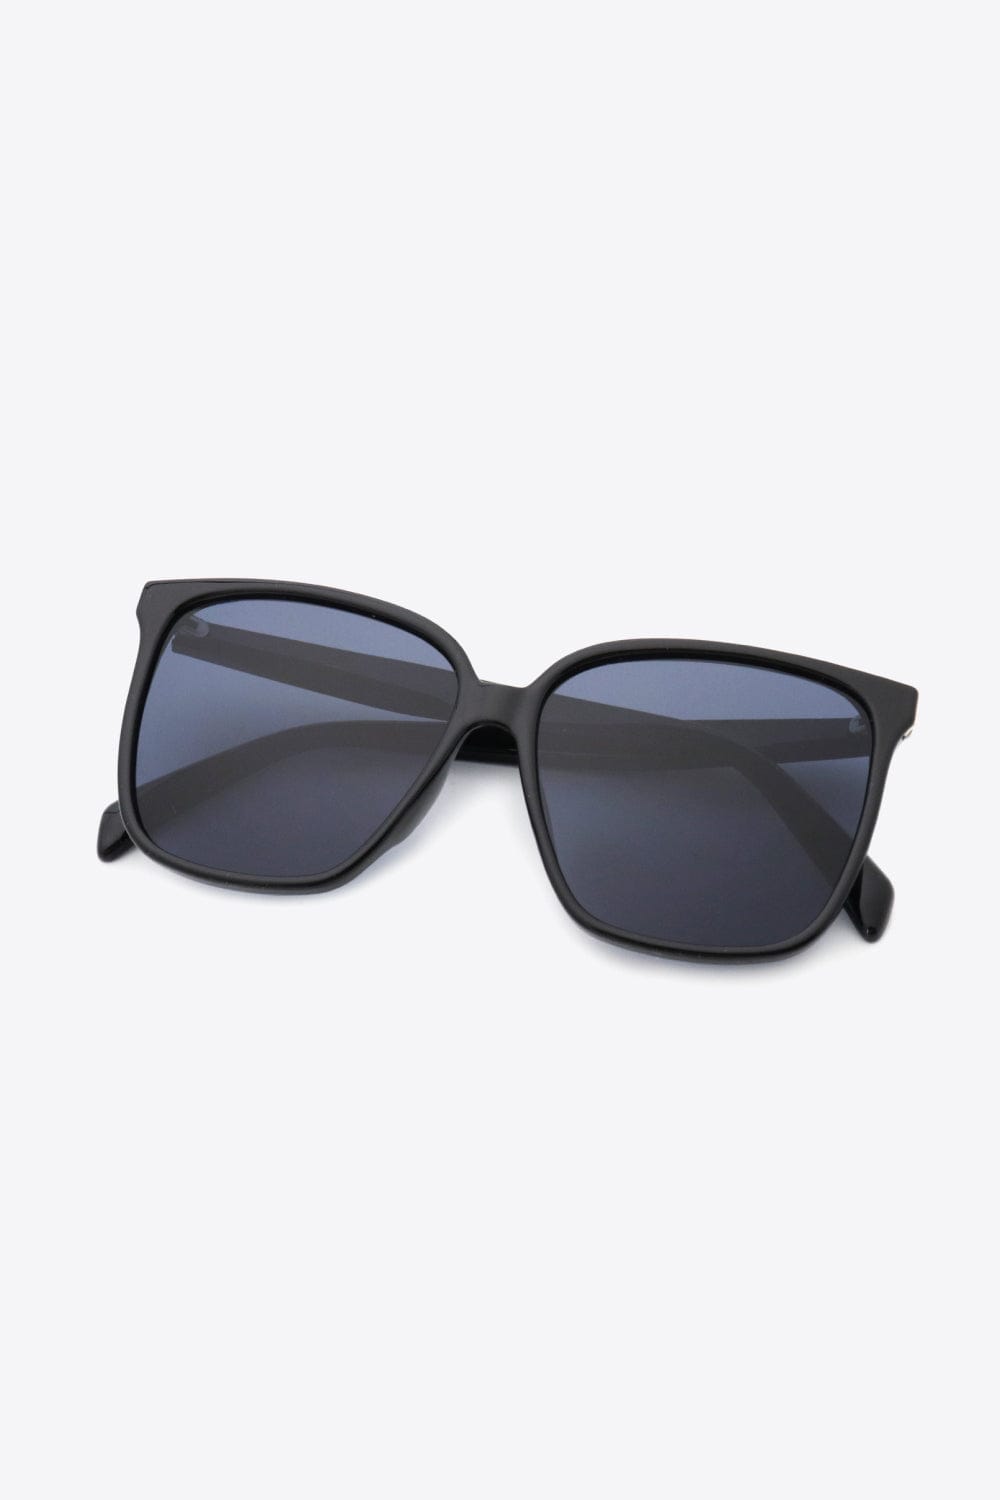 The802Gypsy sunglasses Dusty  Blue / One Size GYPSY-Polycarbonate Frame Wayfarer Sunglasses